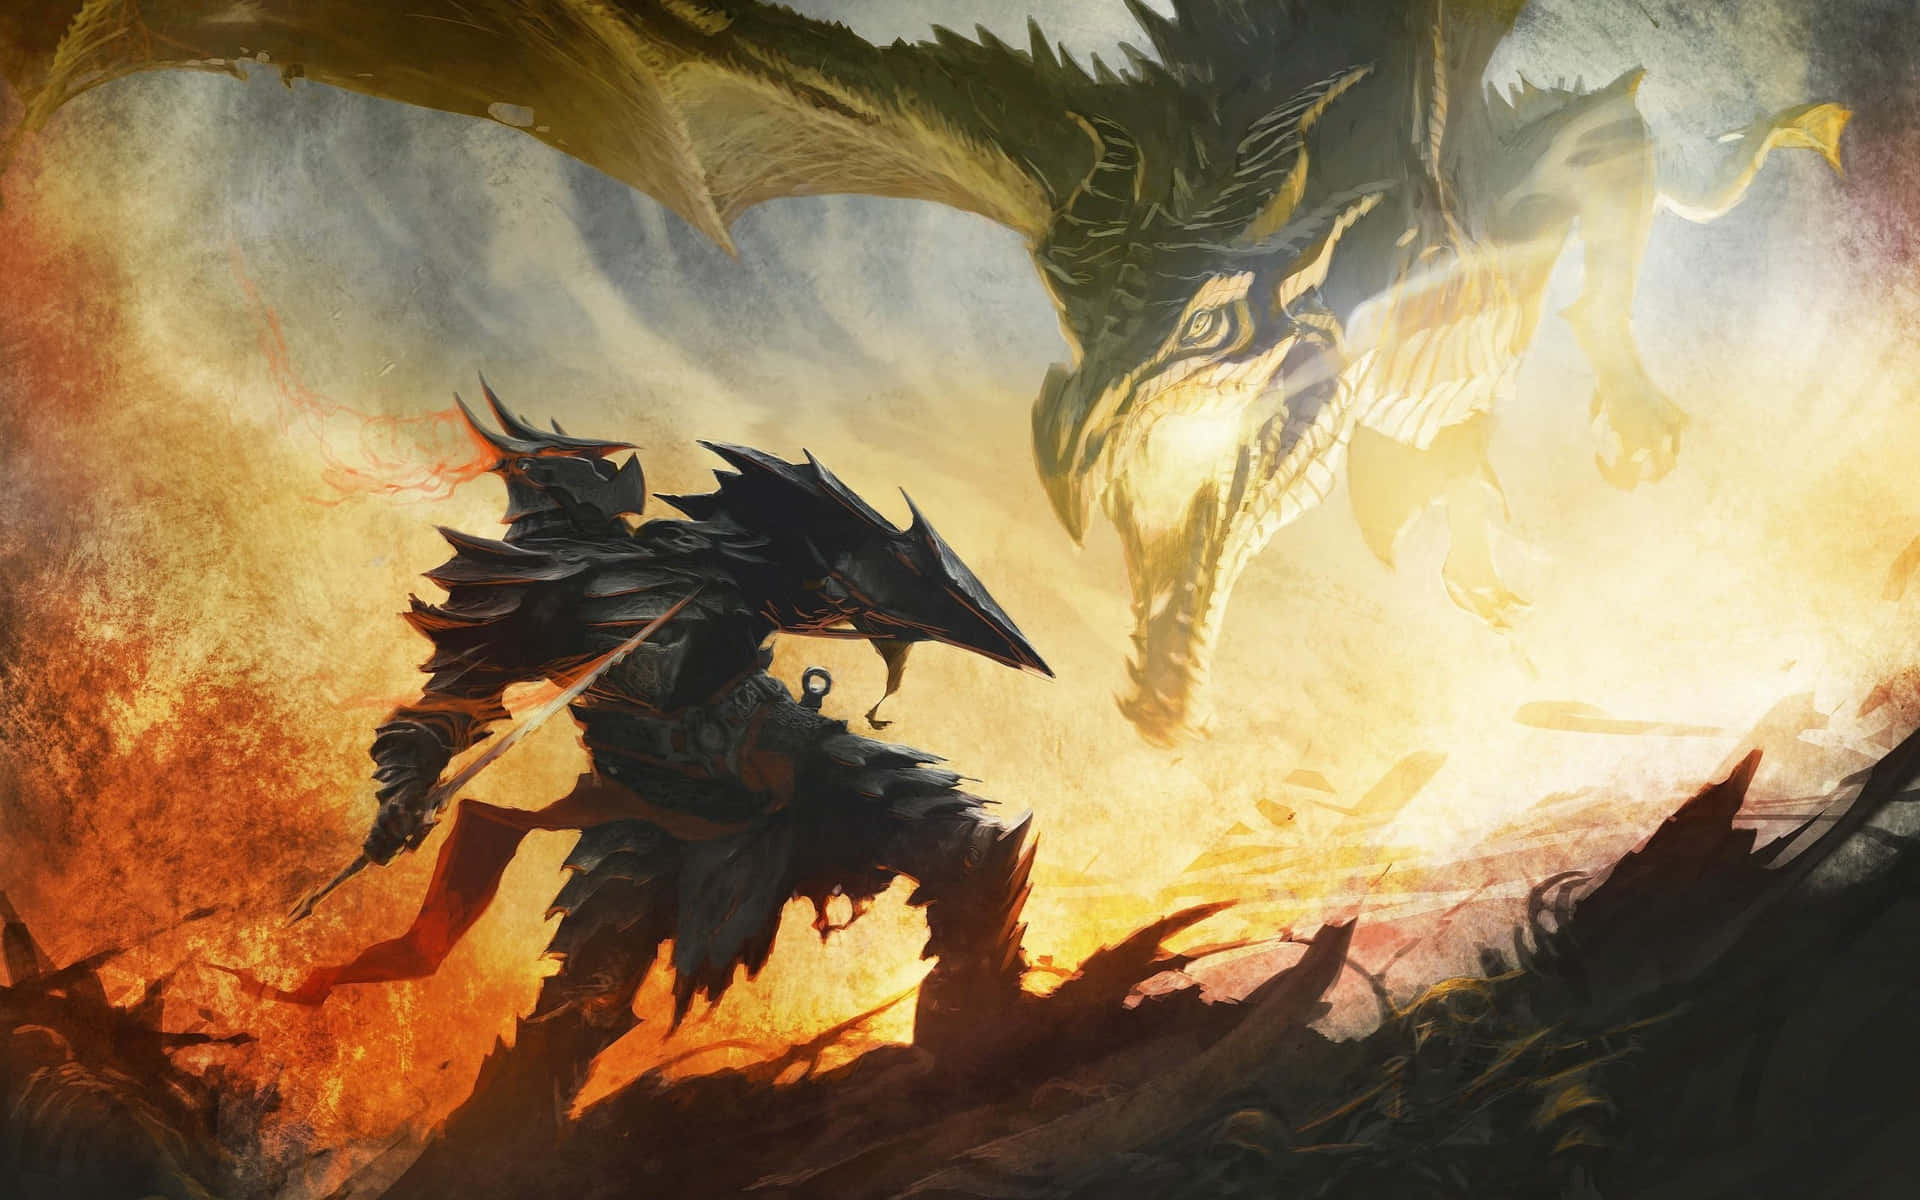 Dragonborn in Skyrim landscape